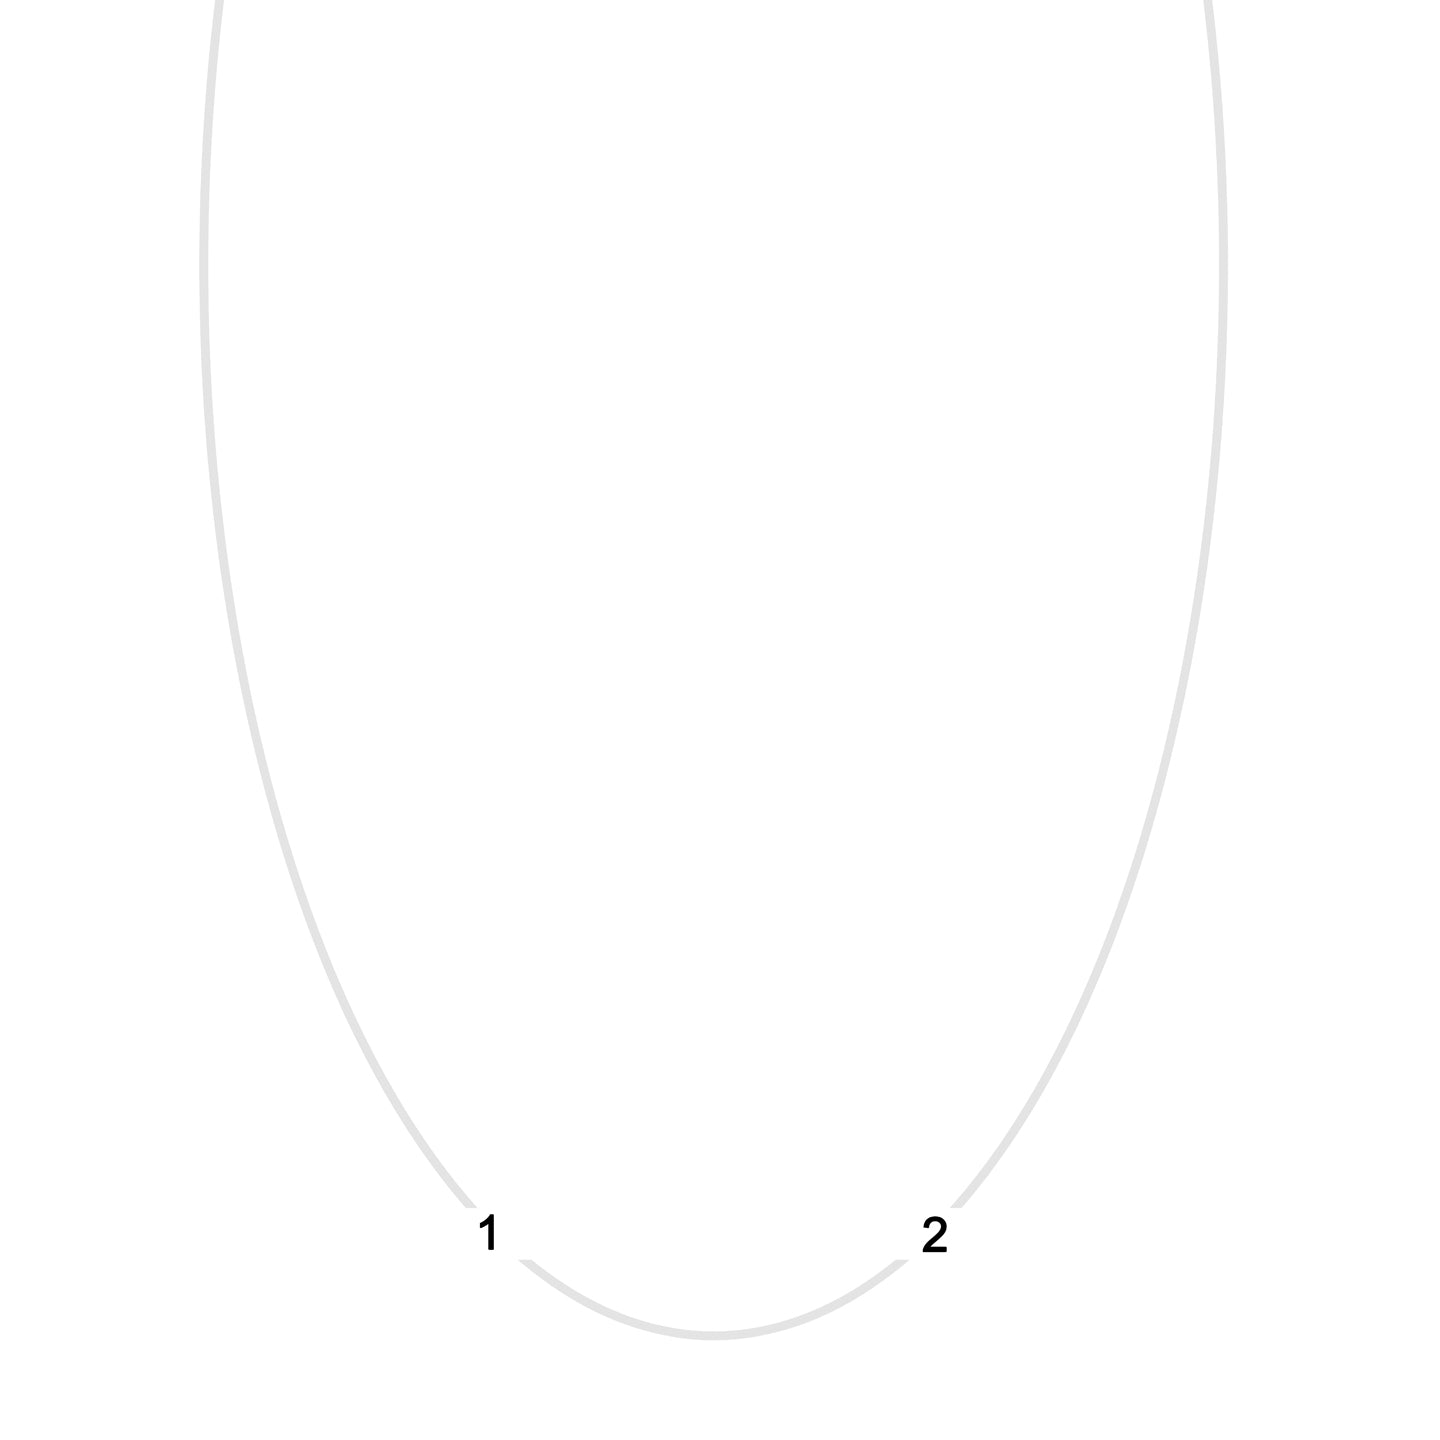 2 gold_initial letter necklace illustration_5cb194f3 e60c 49dc 930c e52efce5fcc8